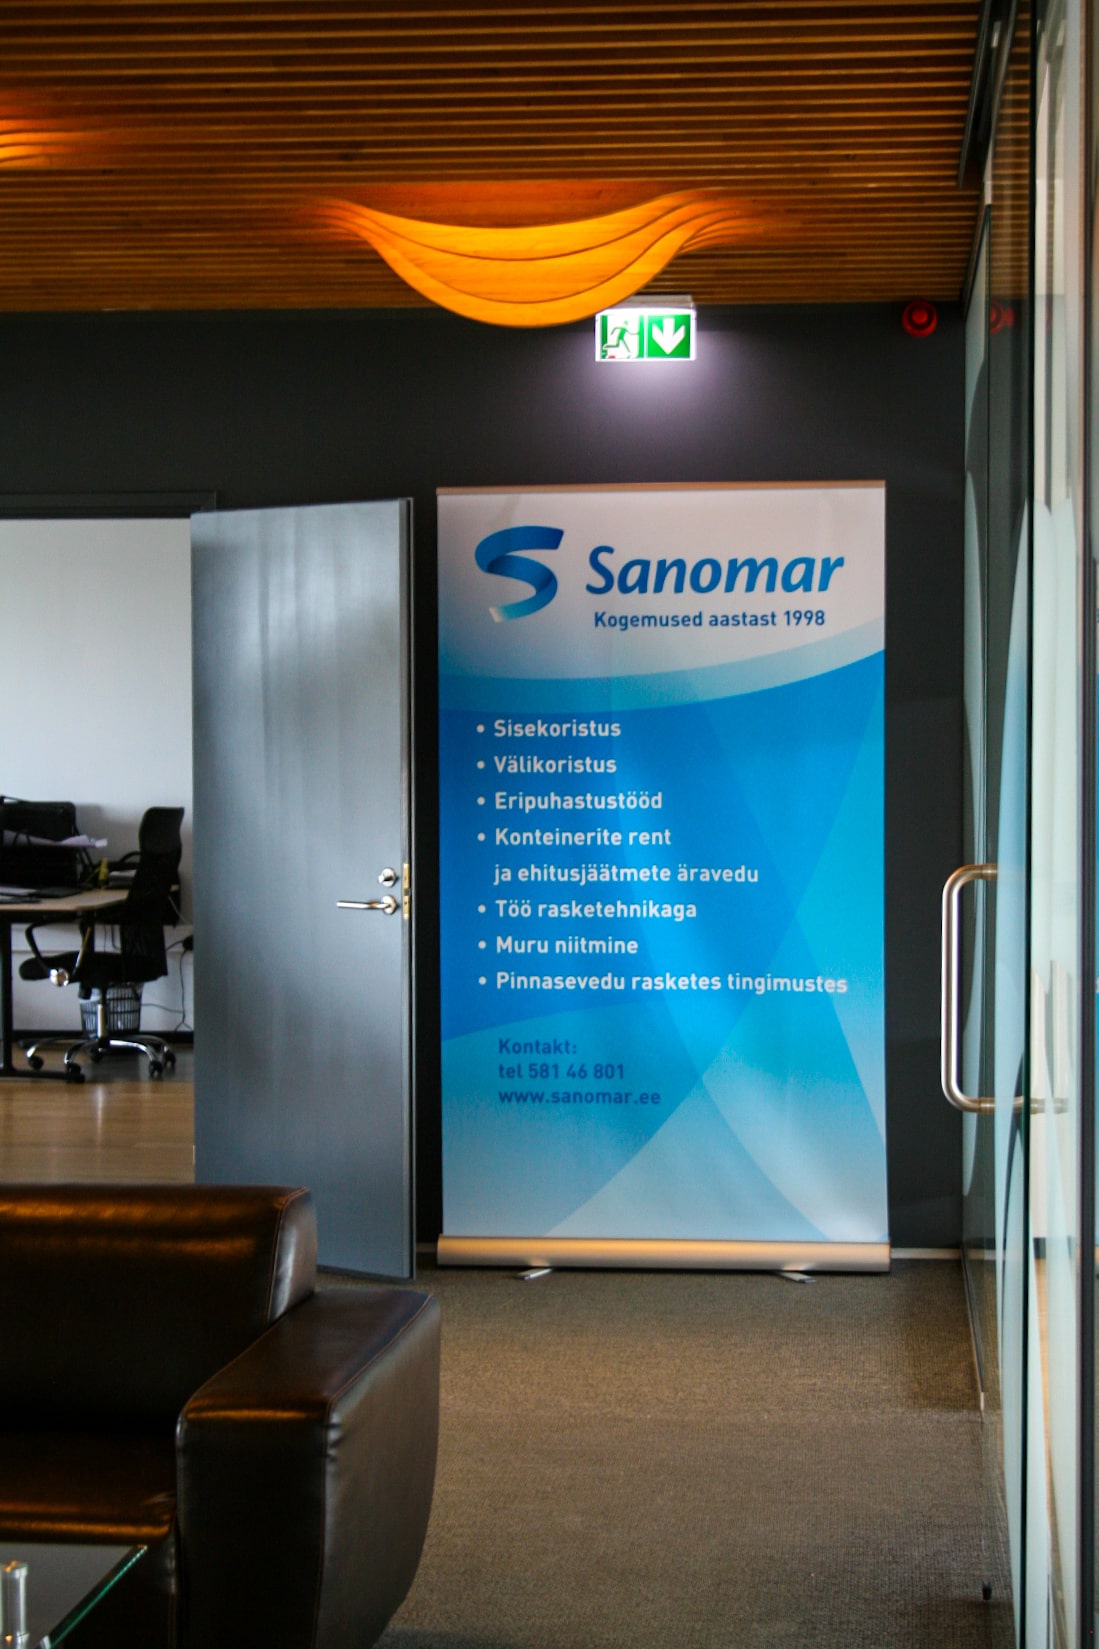 Sanomar services